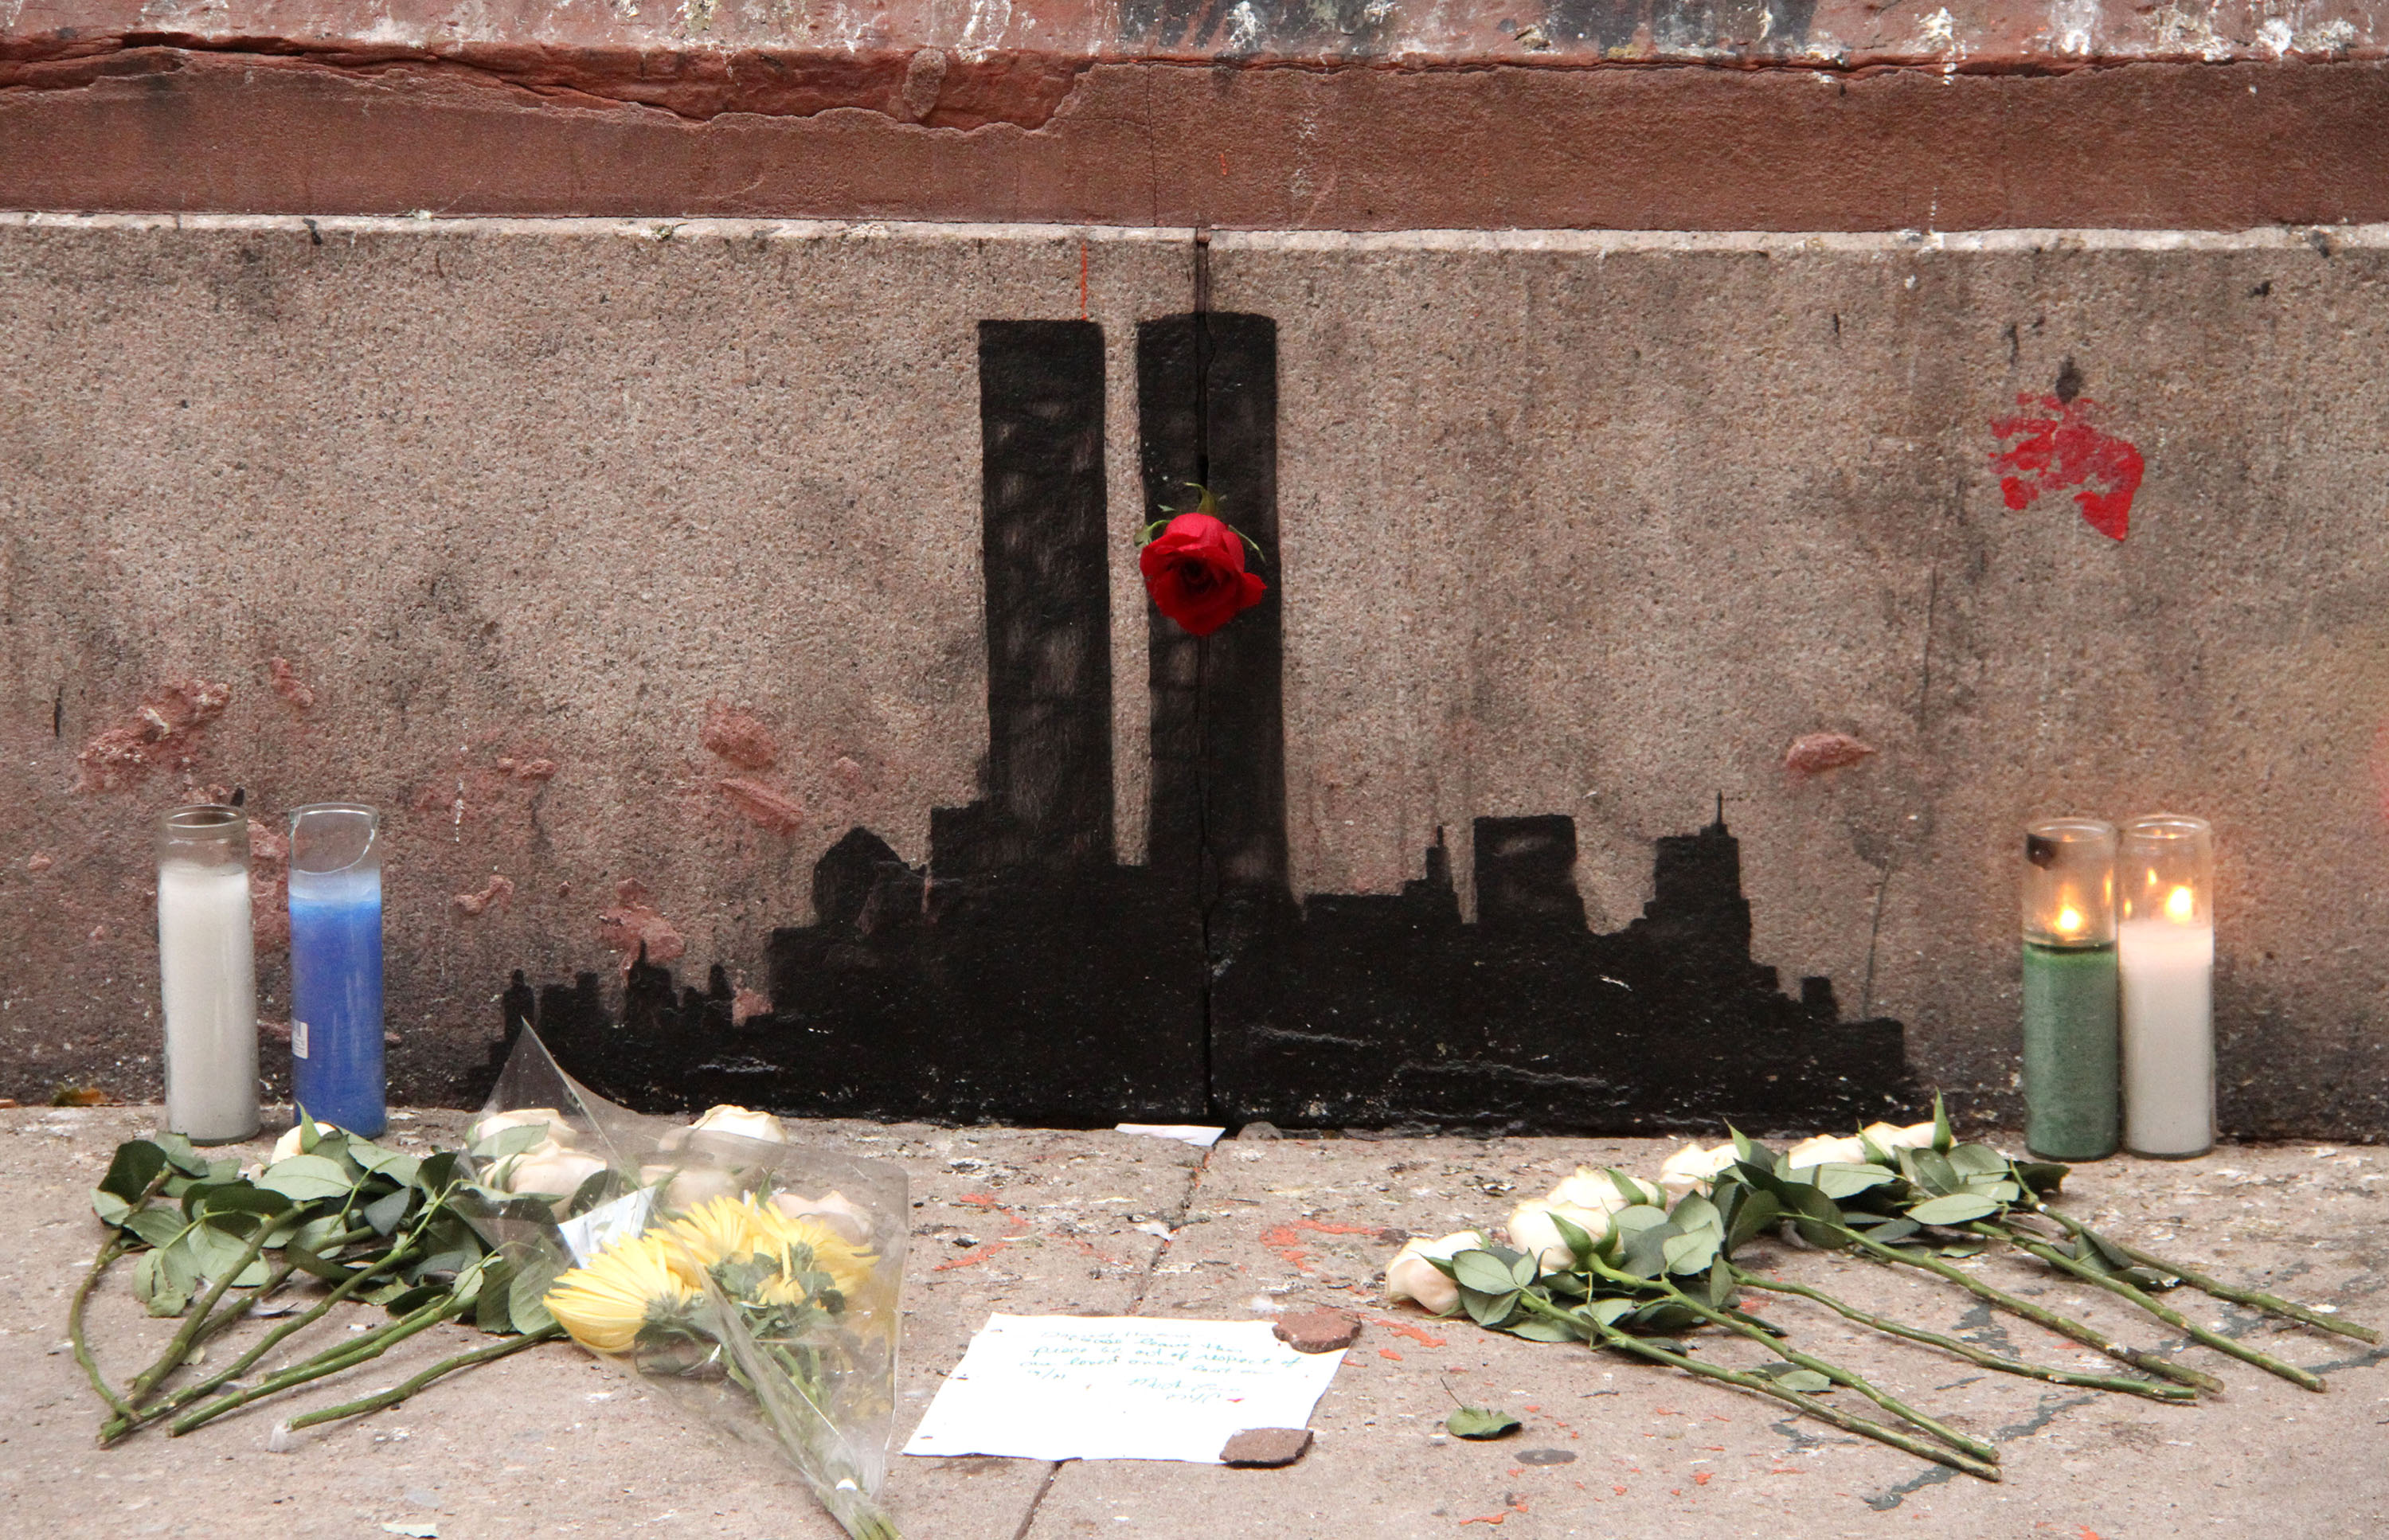 Banksy's 9/11 tribute featuring the Twin Towers located at Staple Street in TriBeCa, New York City, Oct. 16, 2013. (Nancy Kaszerman—Zumapress/Corbis)